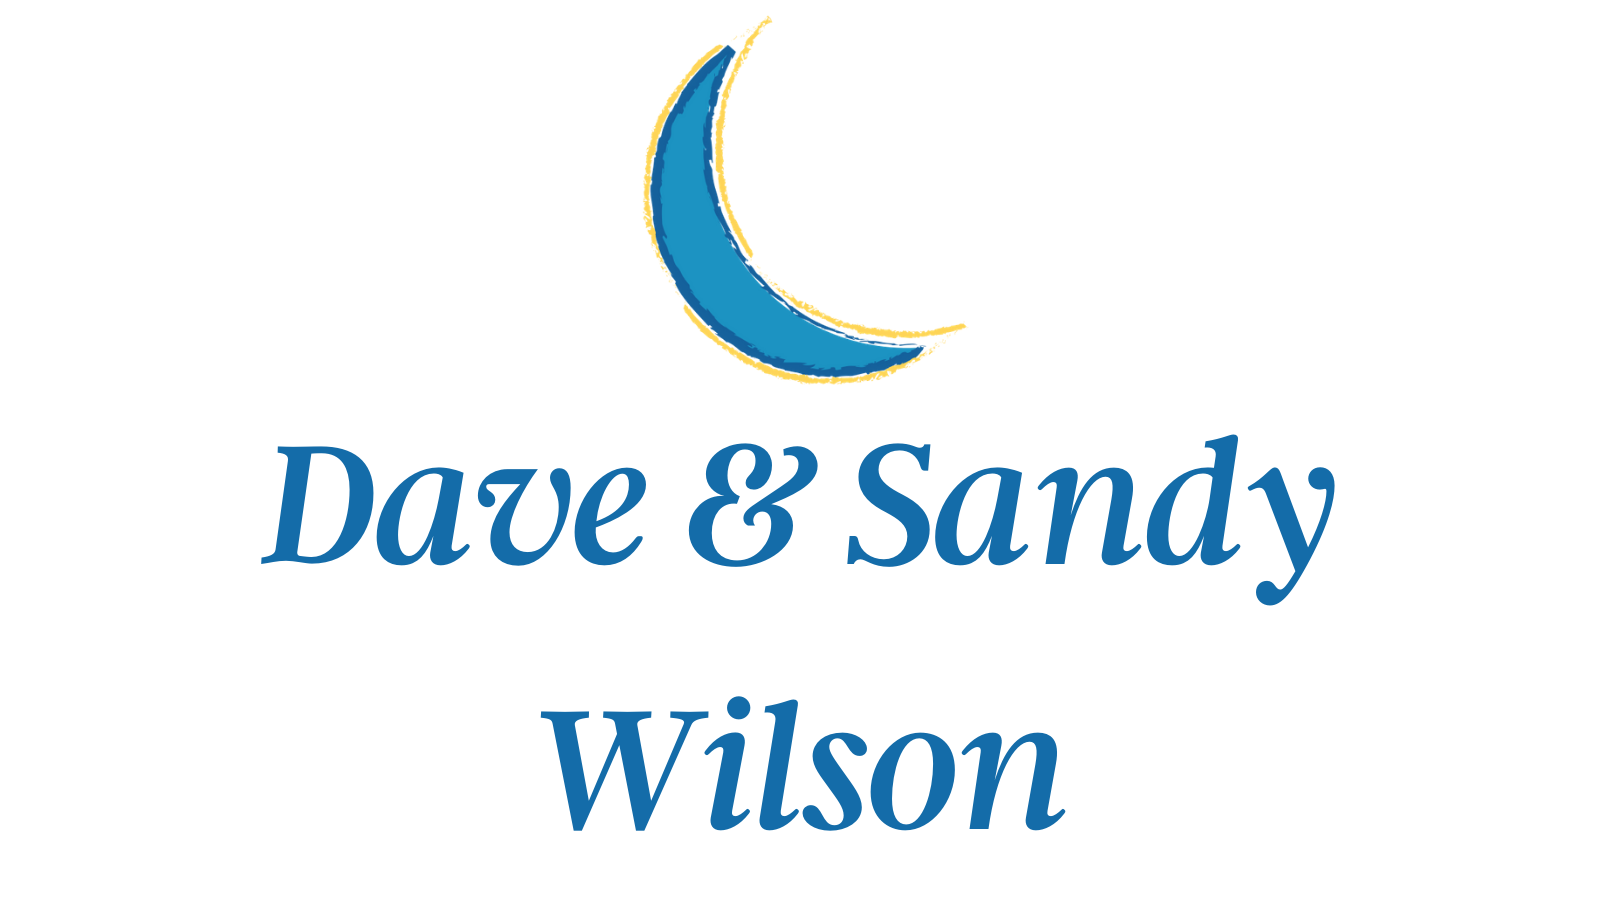 Dave & Sandy Wilson